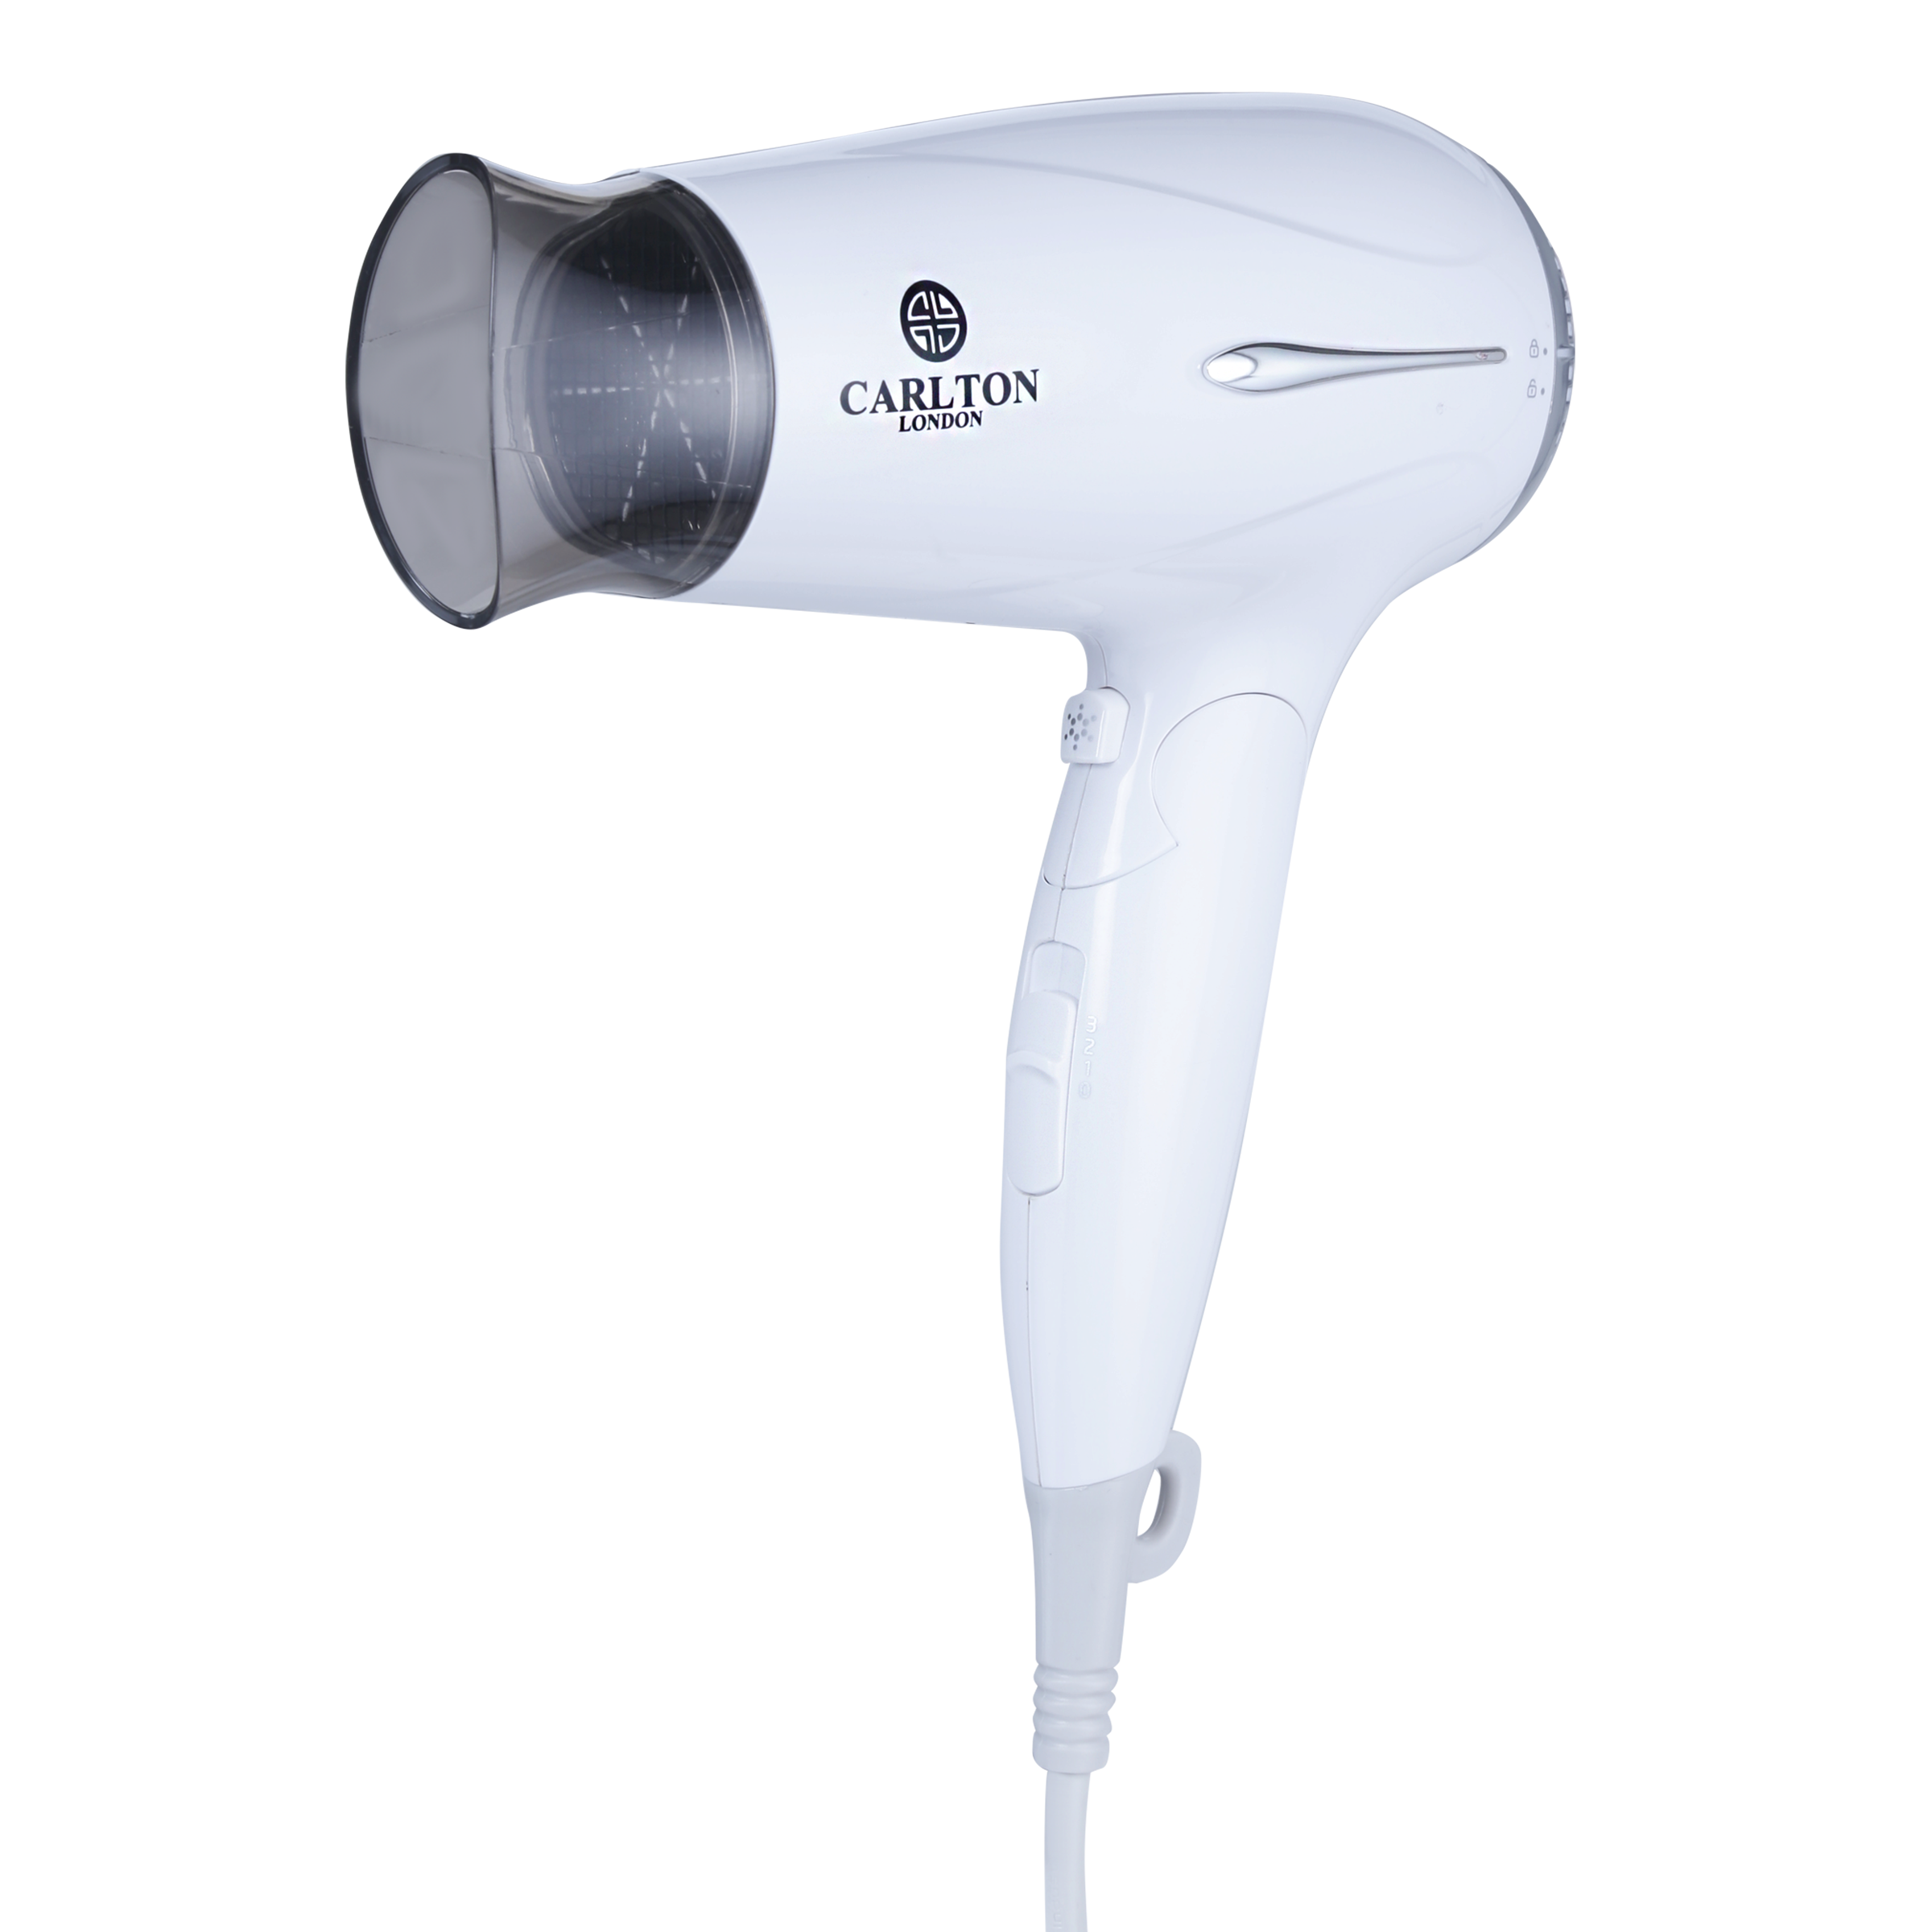 Carlton London Hair Dryer (Ionic Feature, CLSHCG404sHC15, White)